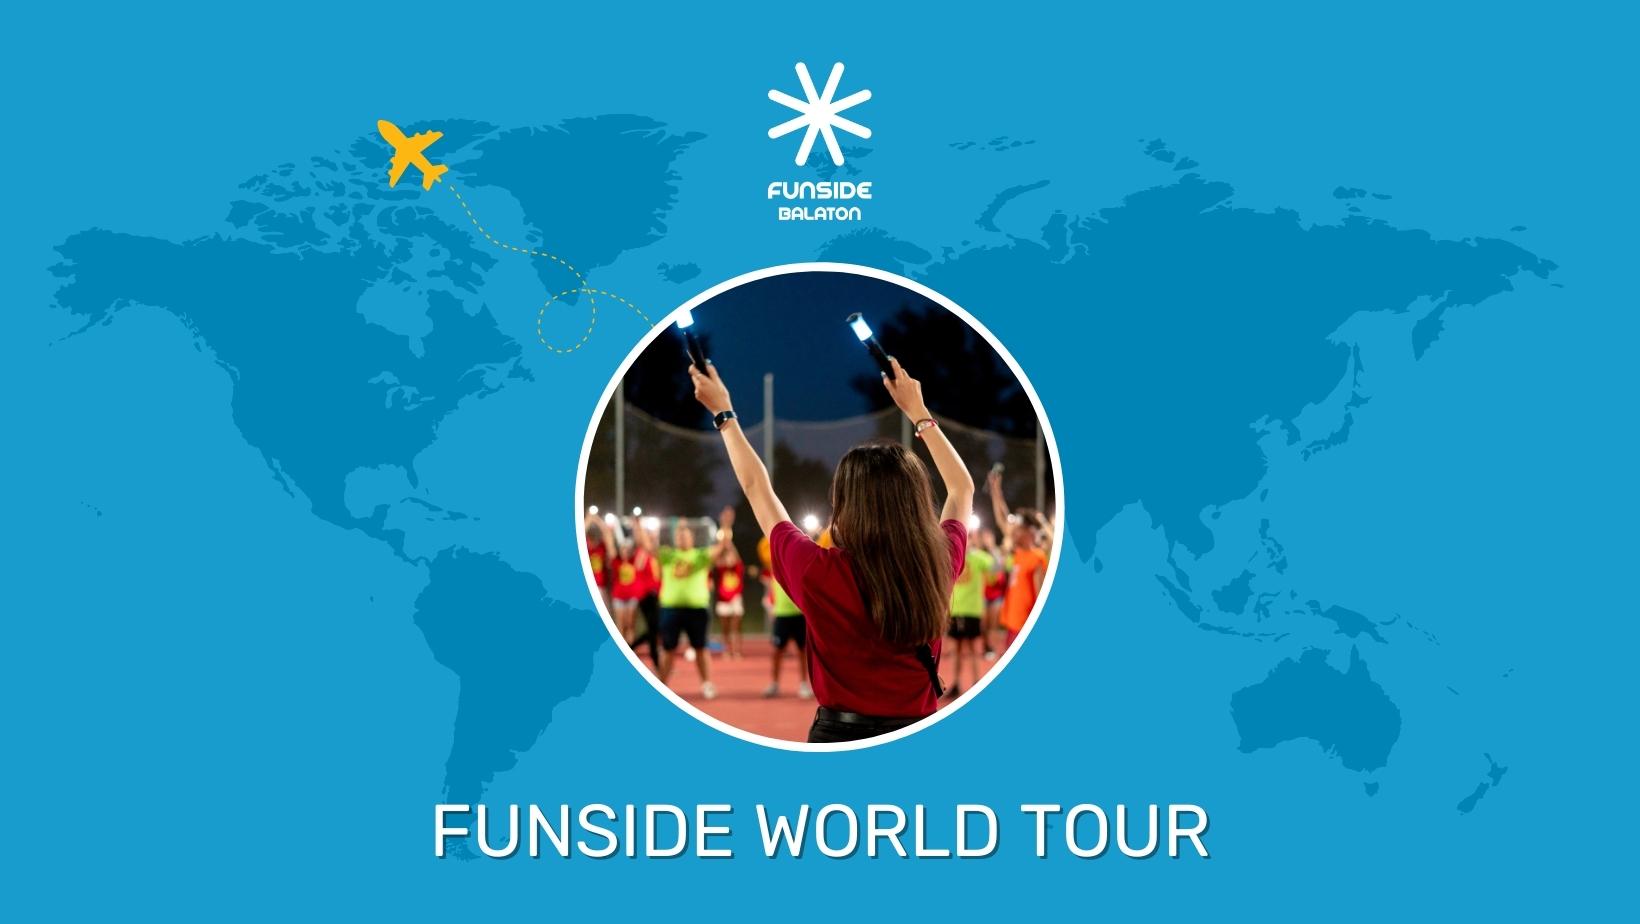 Week 3 theme: Funside World Tour